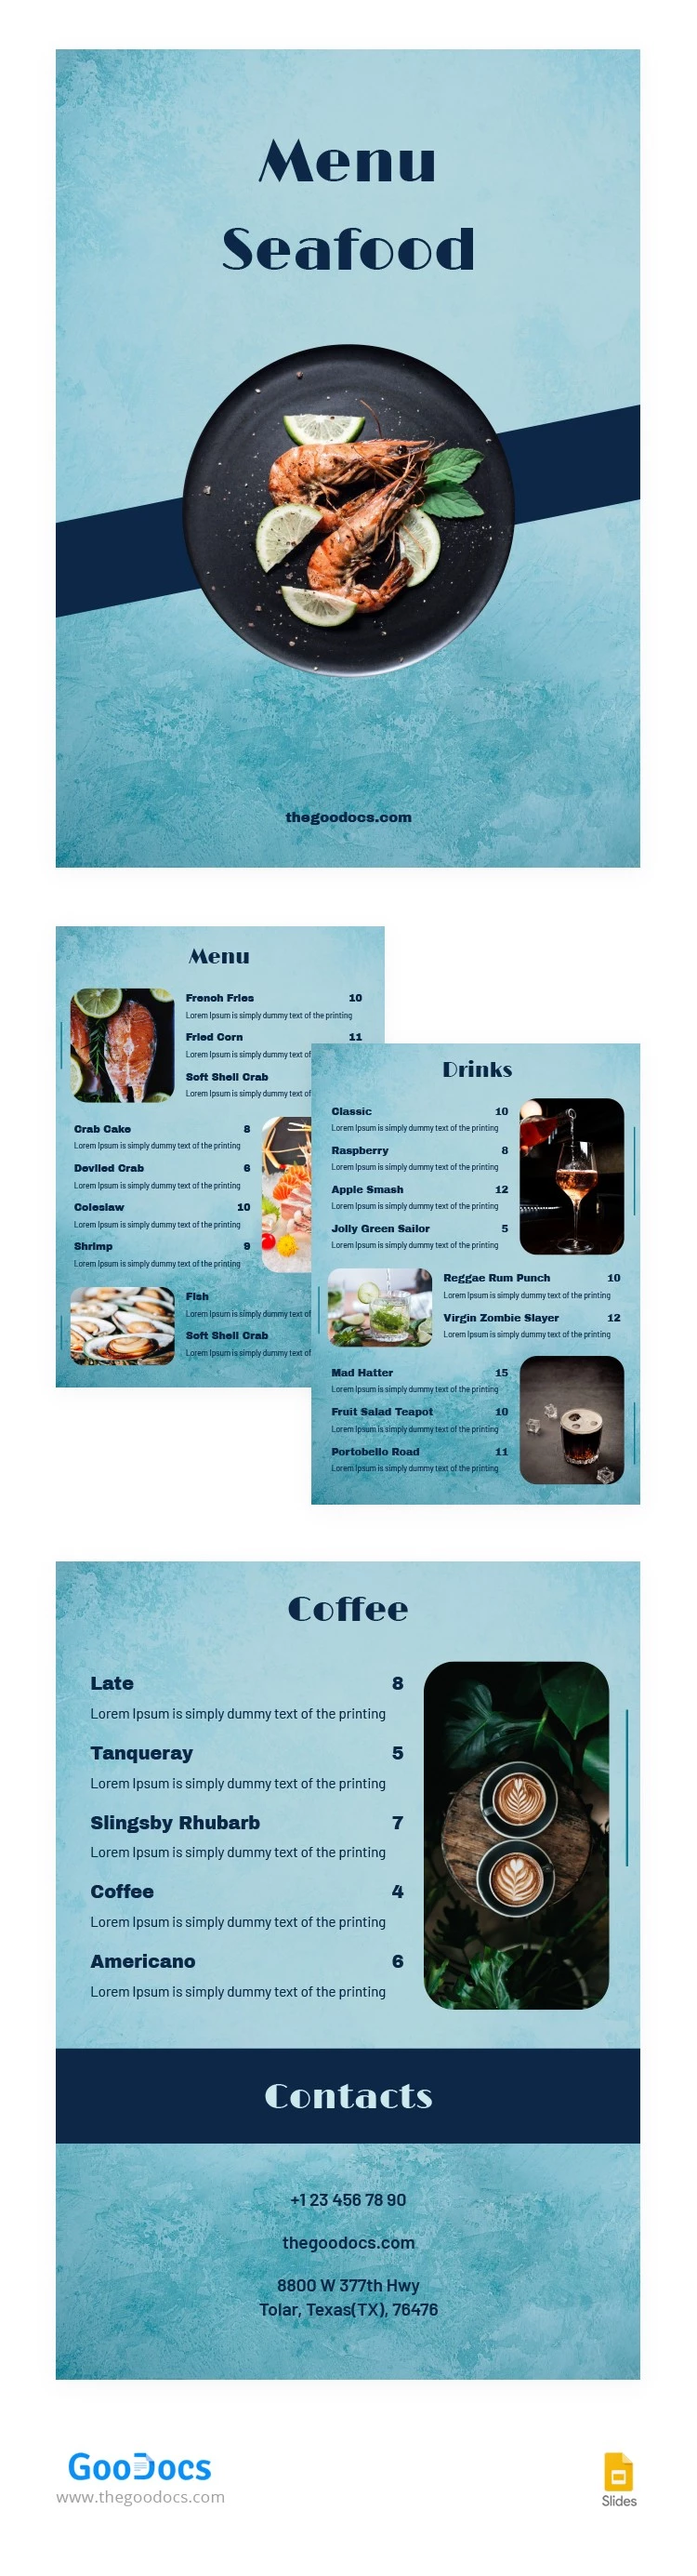 Stylish Restaurant Menu Seafood - free Google Docs Template - 10065015